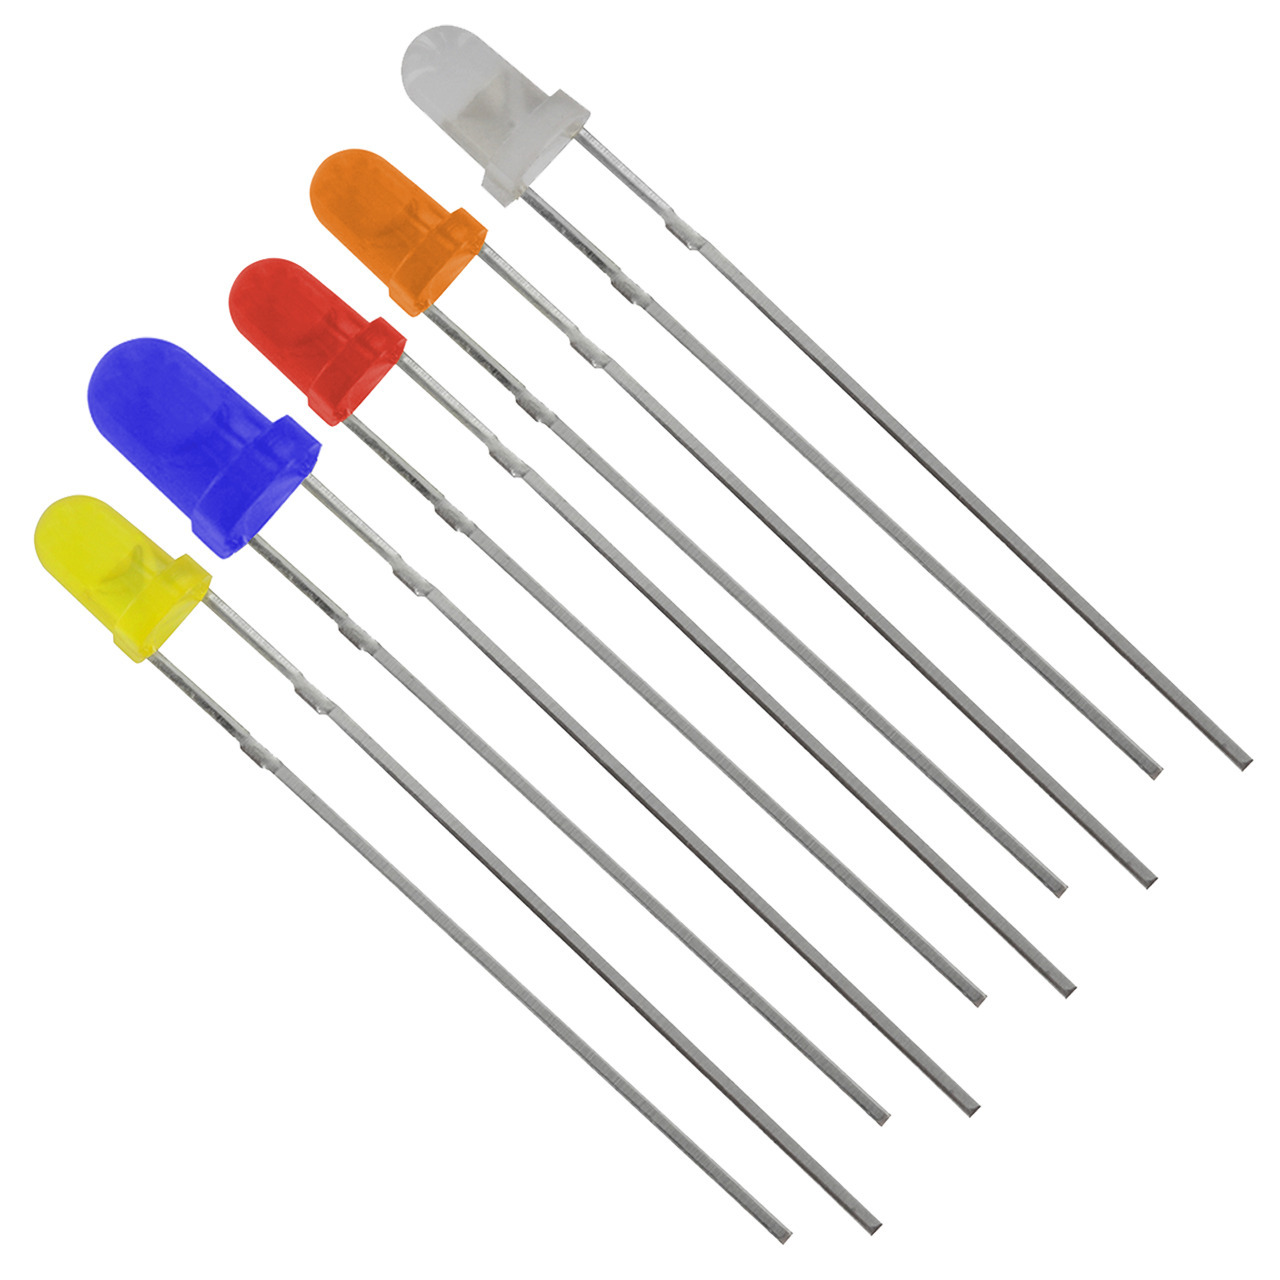 LED-Set fr SBS-Bausatz (114x weiss- 30x blau- 30x rot- 11x orange- 2x gelb)